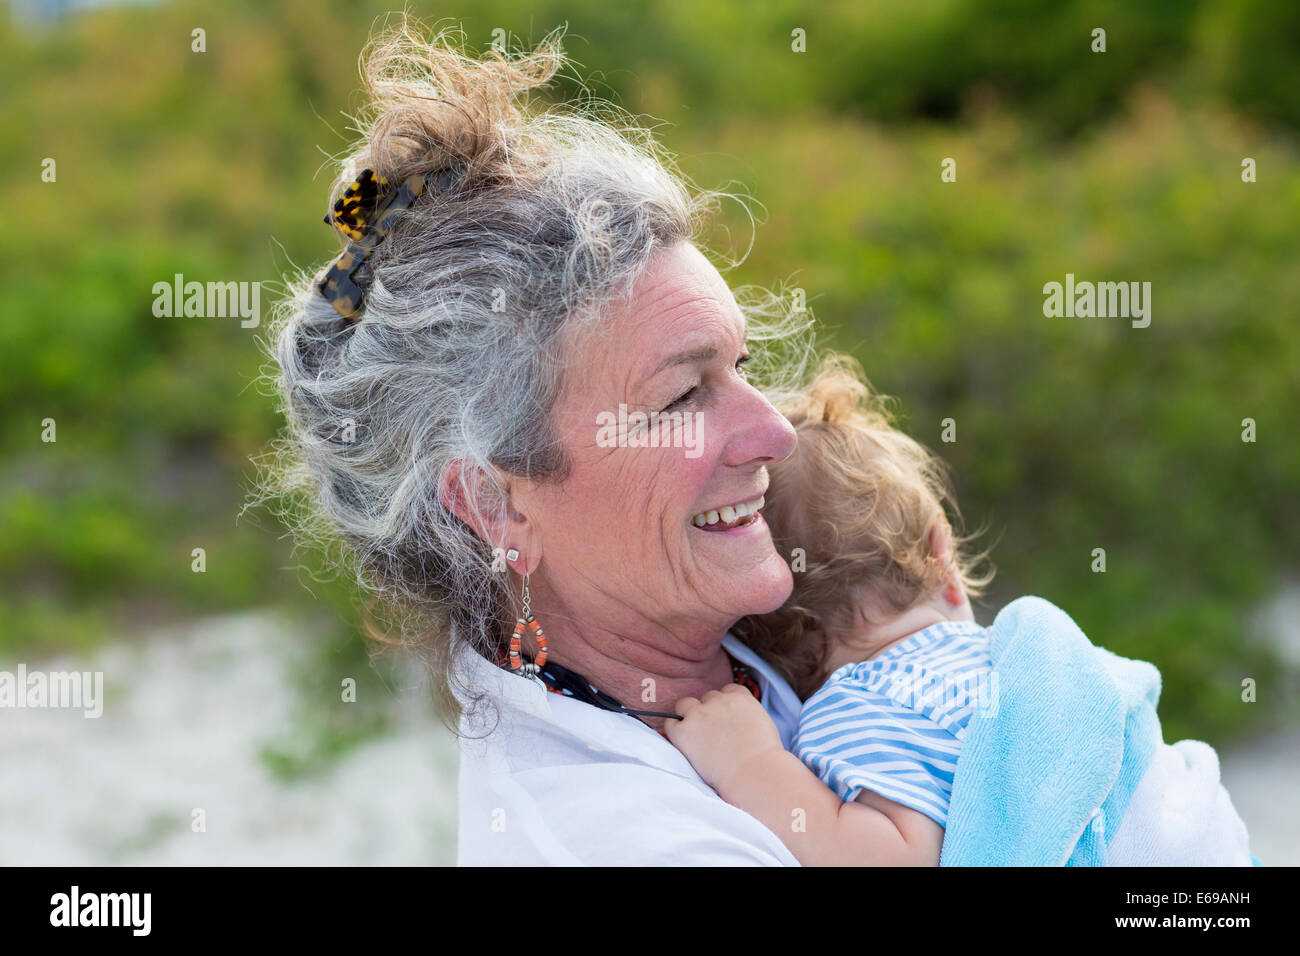 Caucasian woman carrying grandson on beach Stock Photo